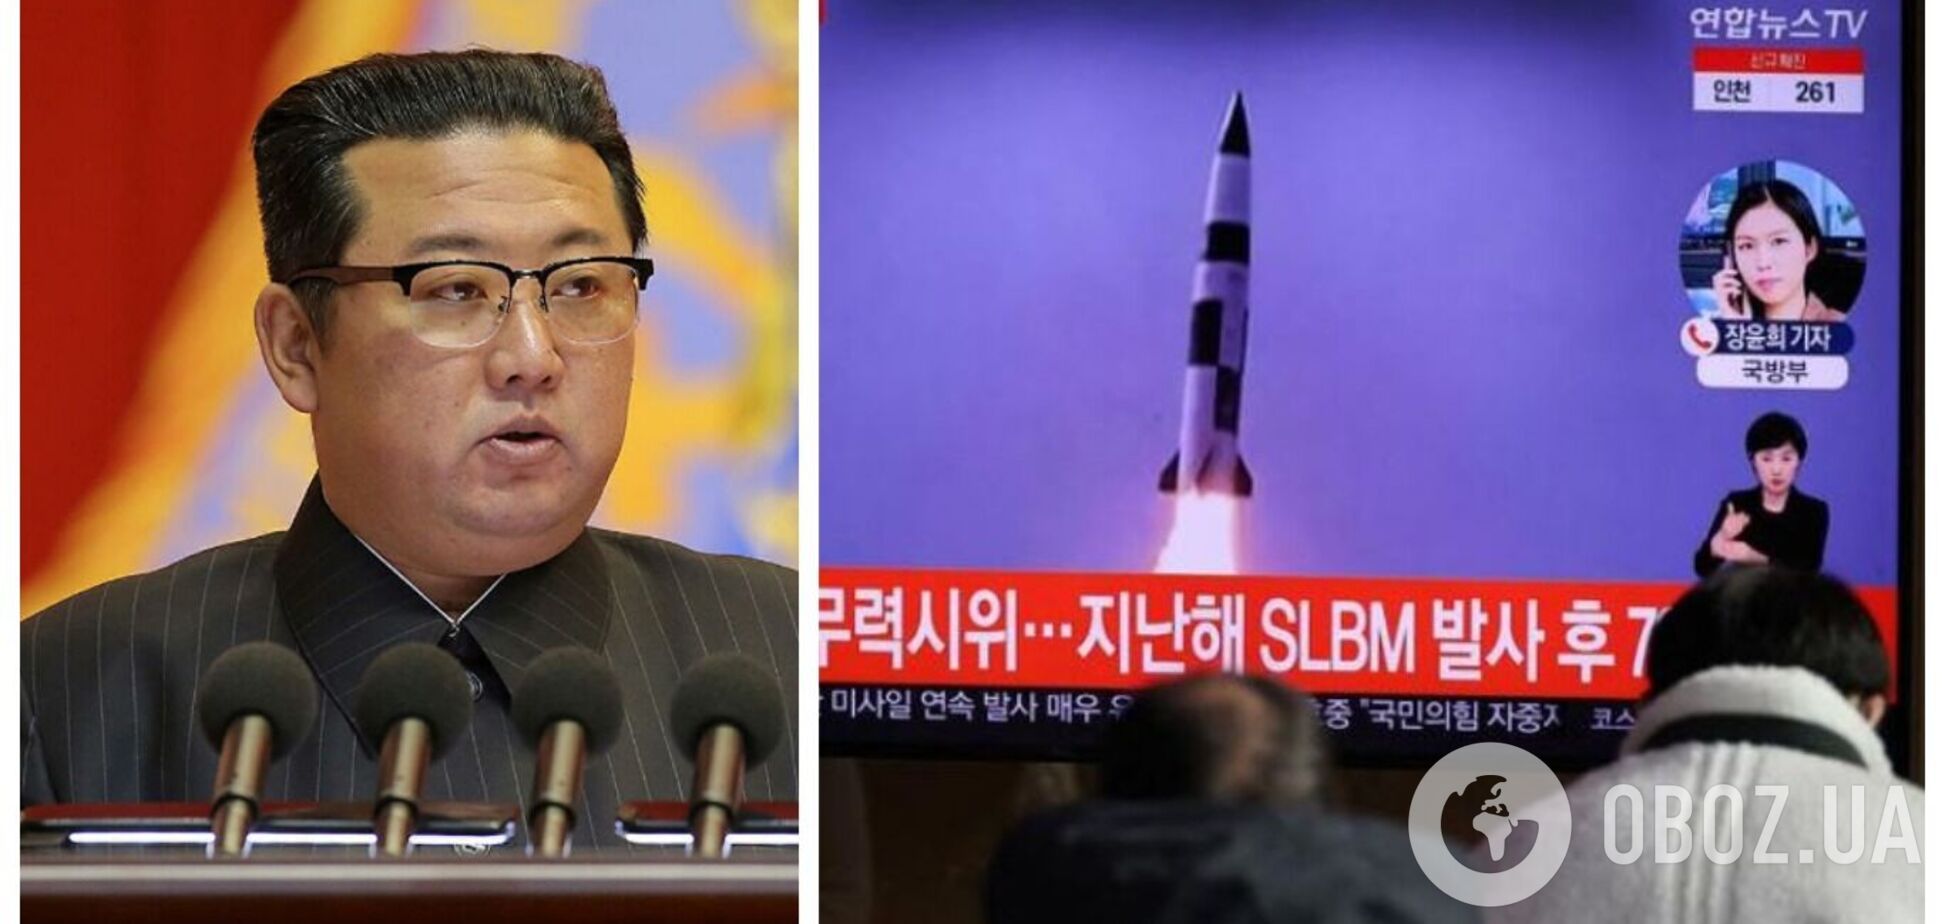 КНДР опробовала межконтинентальную баллистическую ракету у побережья Японии